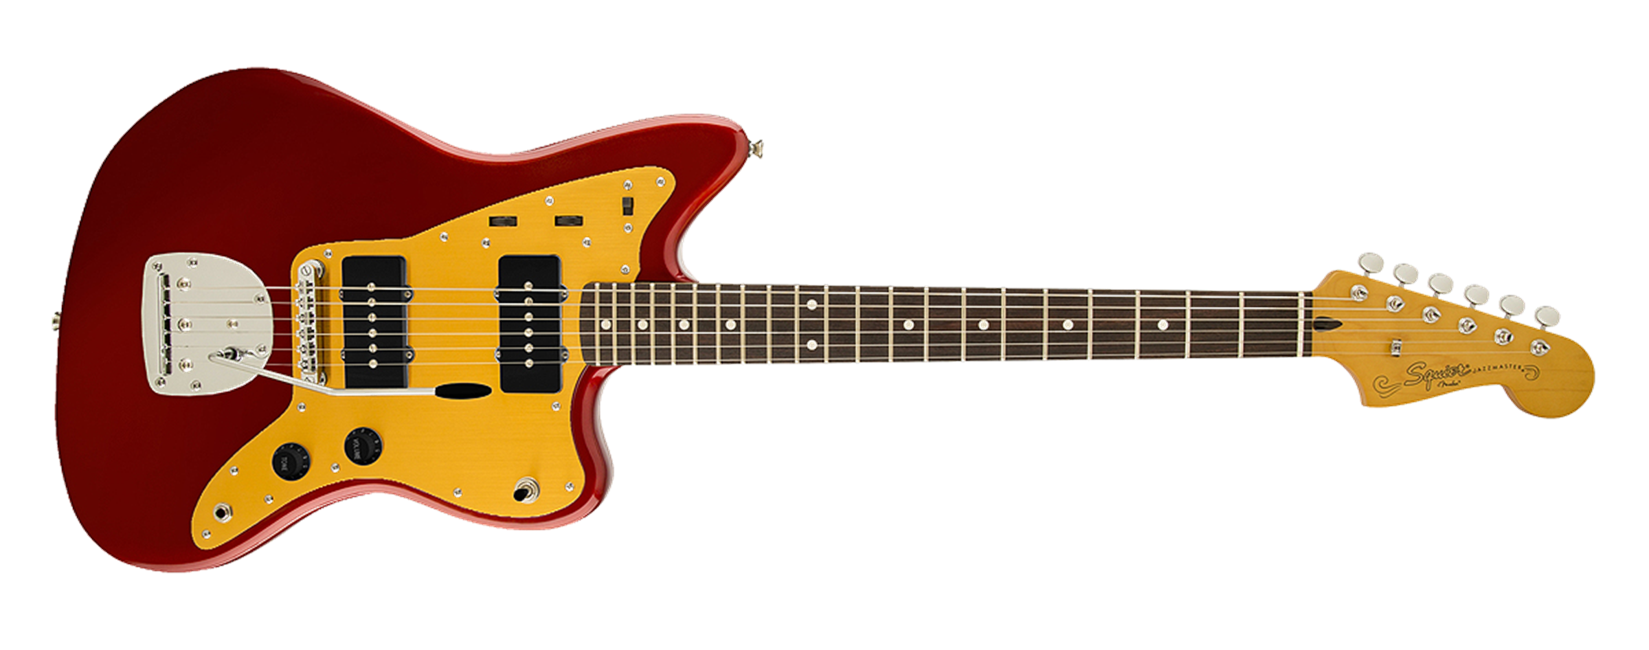 Squier By Fender - Deluxe Jazzmaster - Elektrisk Guitar M. Tremolo Arm (Candy Apple Red)